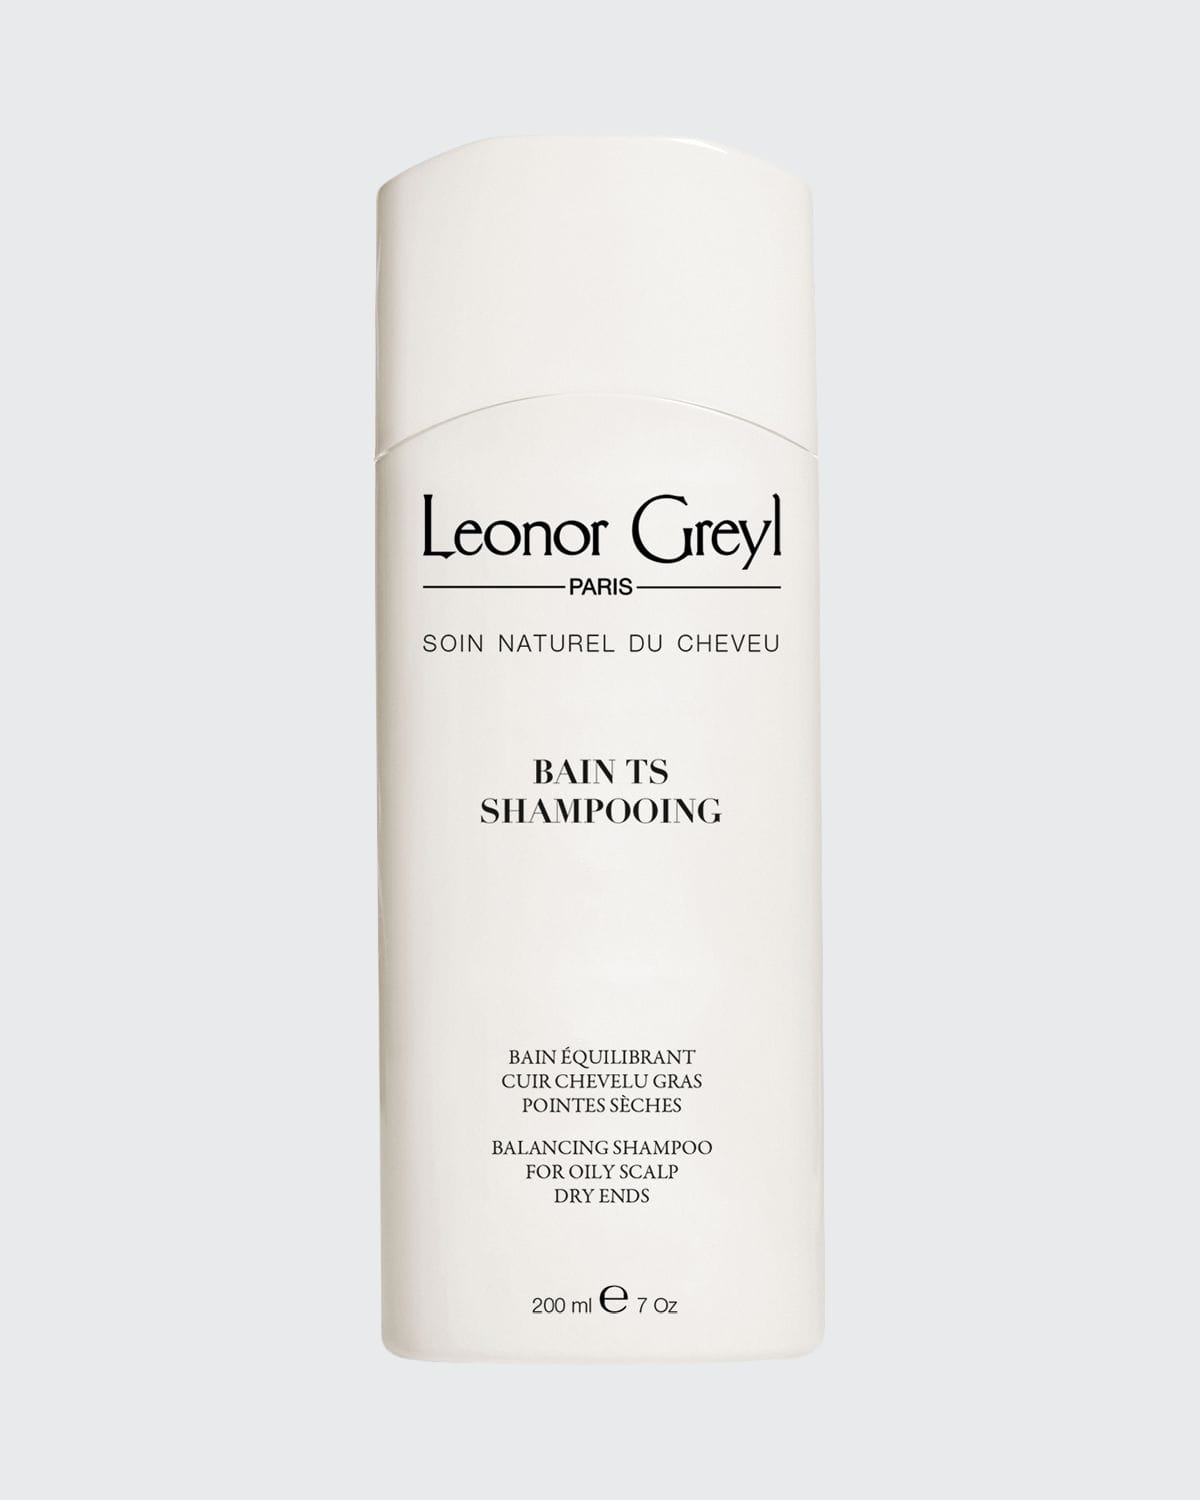 Bain TS Shampooing (Balancing Shampoo for Oily Scalp and Dry Ends), 6.7 oz./ 200 mL